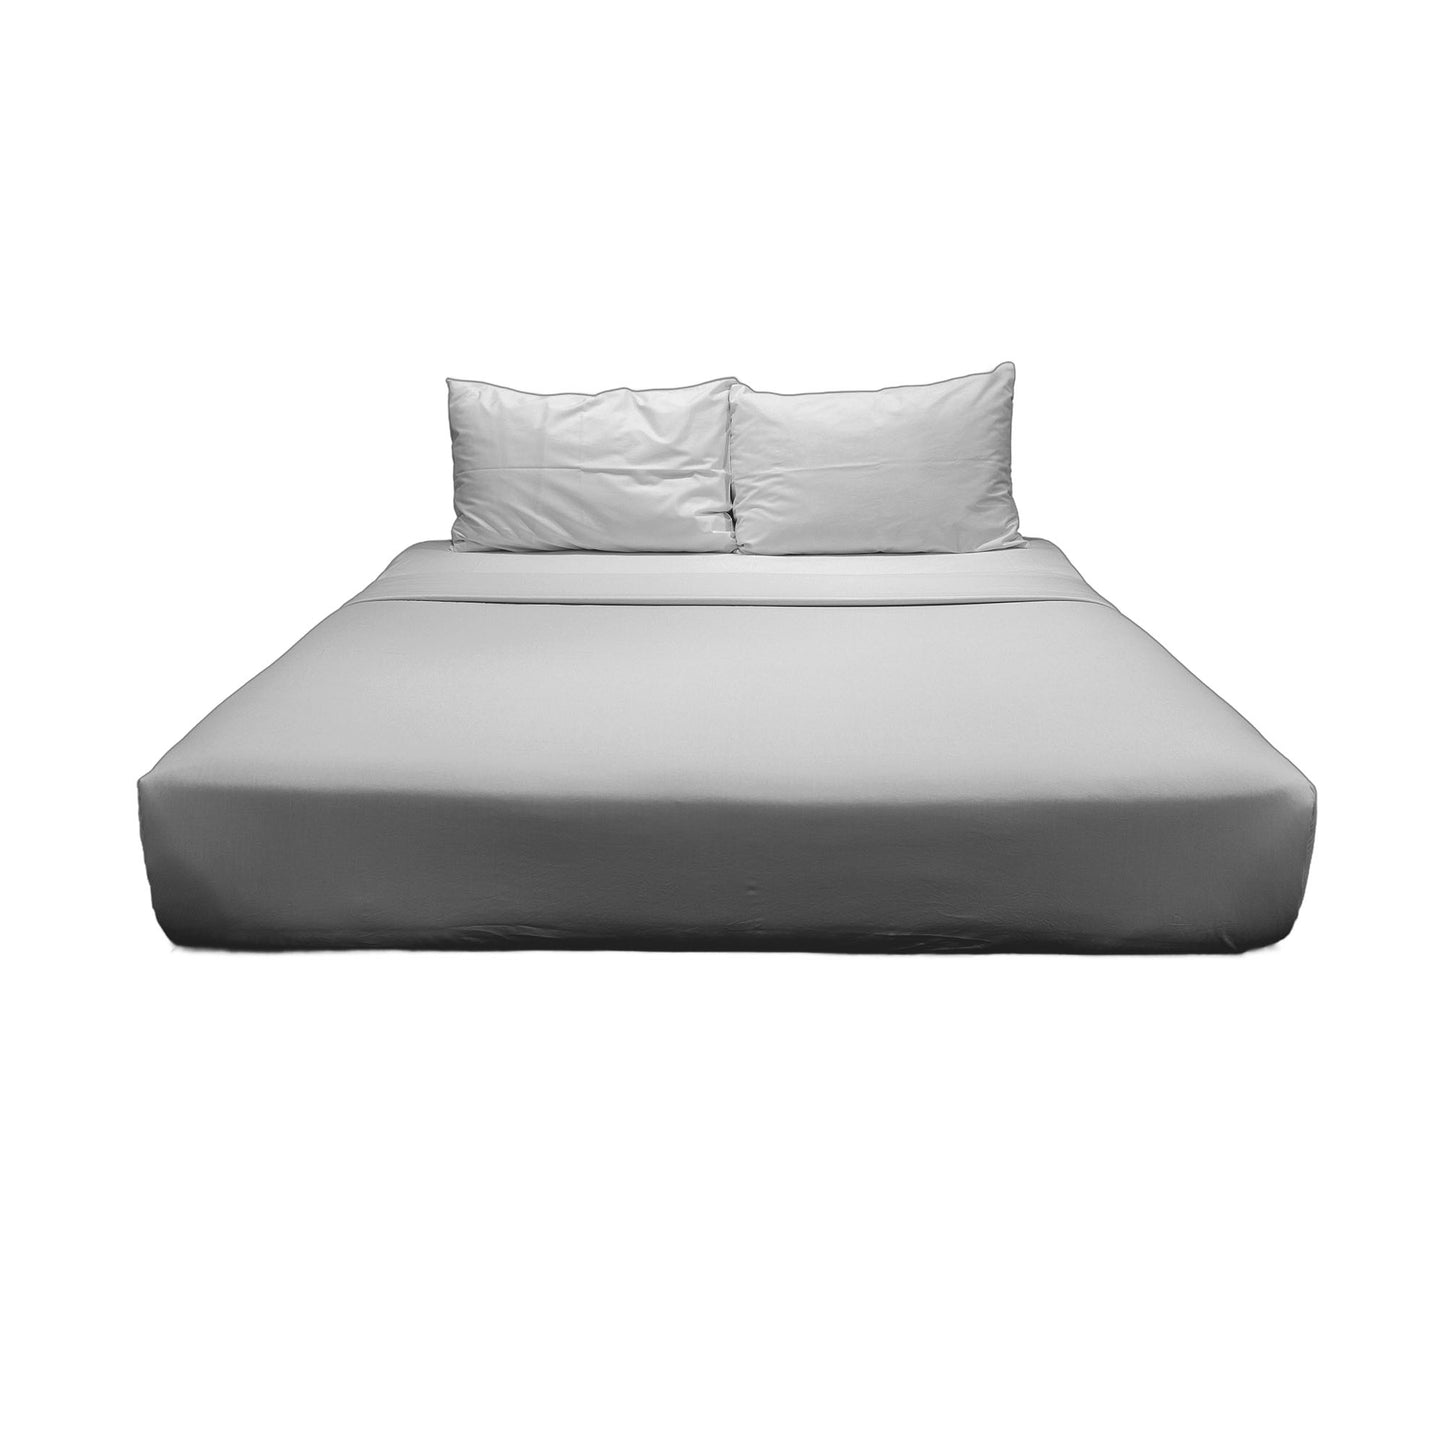 EliteComfort: Premium Microfiber Sheet Set for Luxurious Sleep